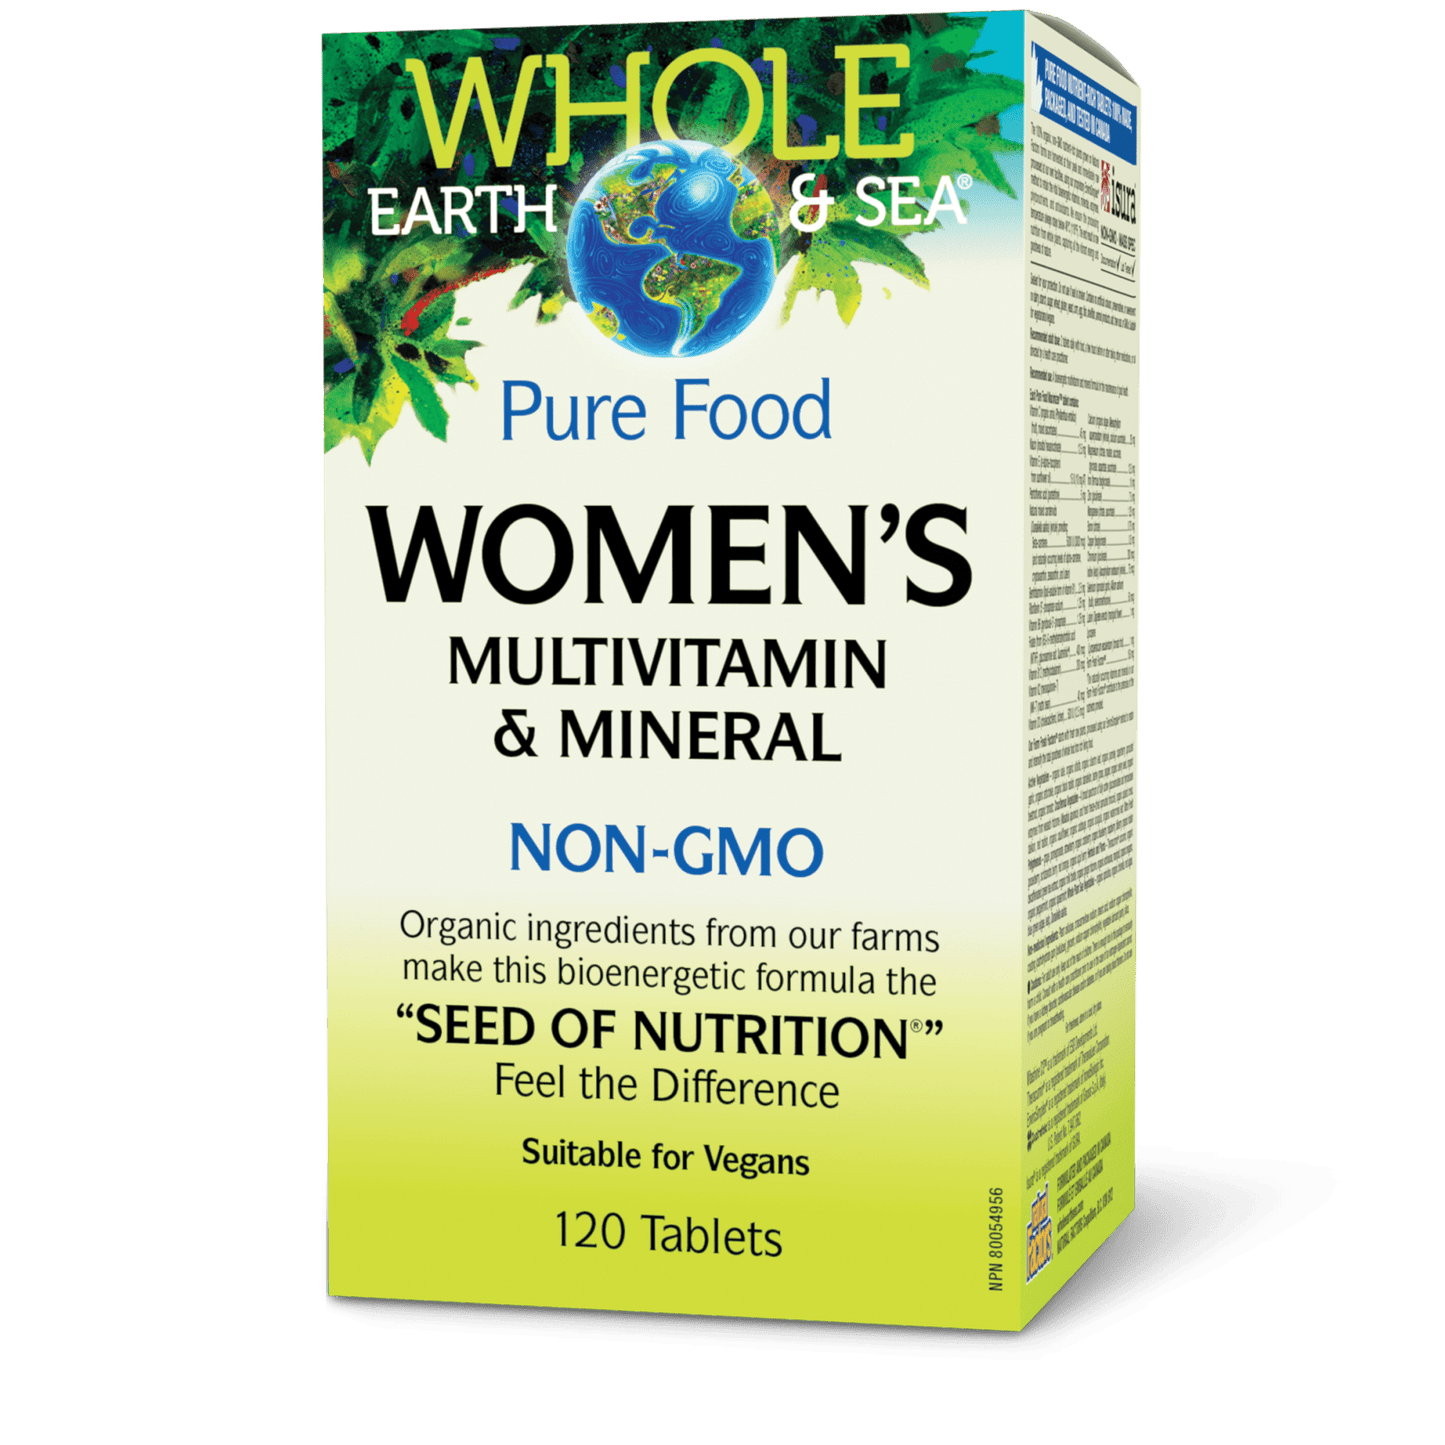 Women’s Multivitamin & Mineral, Whole Earth & Sea, Whole Earth & Sea®|v|image|35520